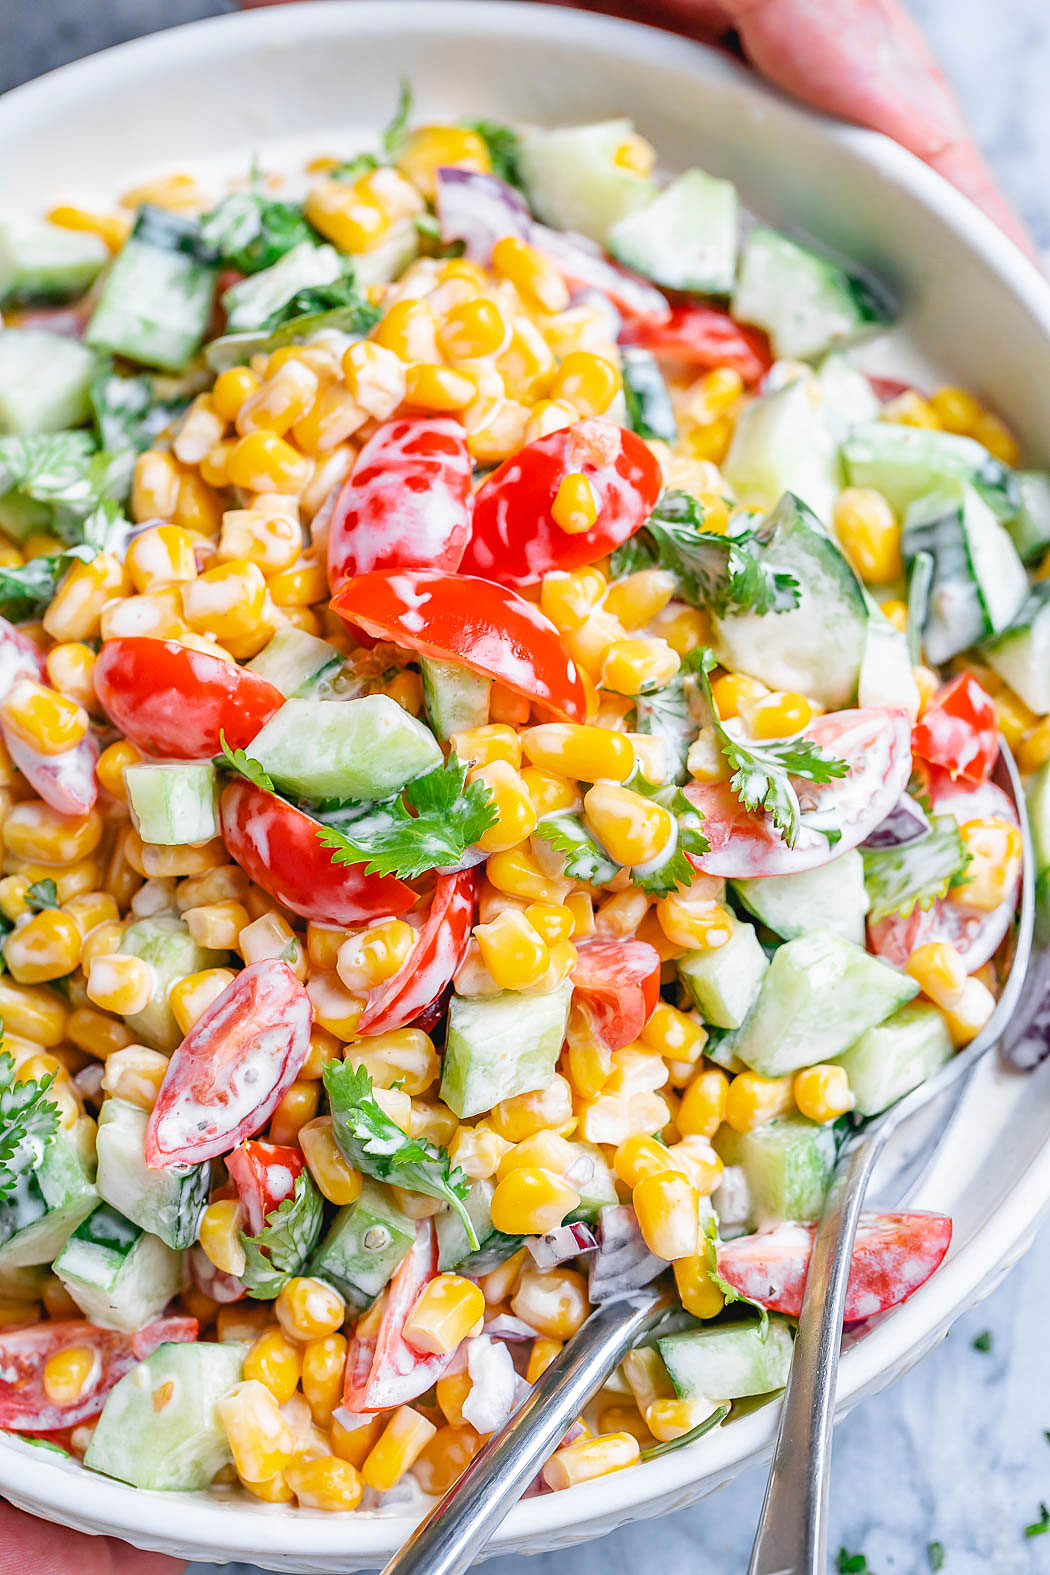 Creamy Corn Salad Recipe Healthy Corn Salad Recipe Eatwell101